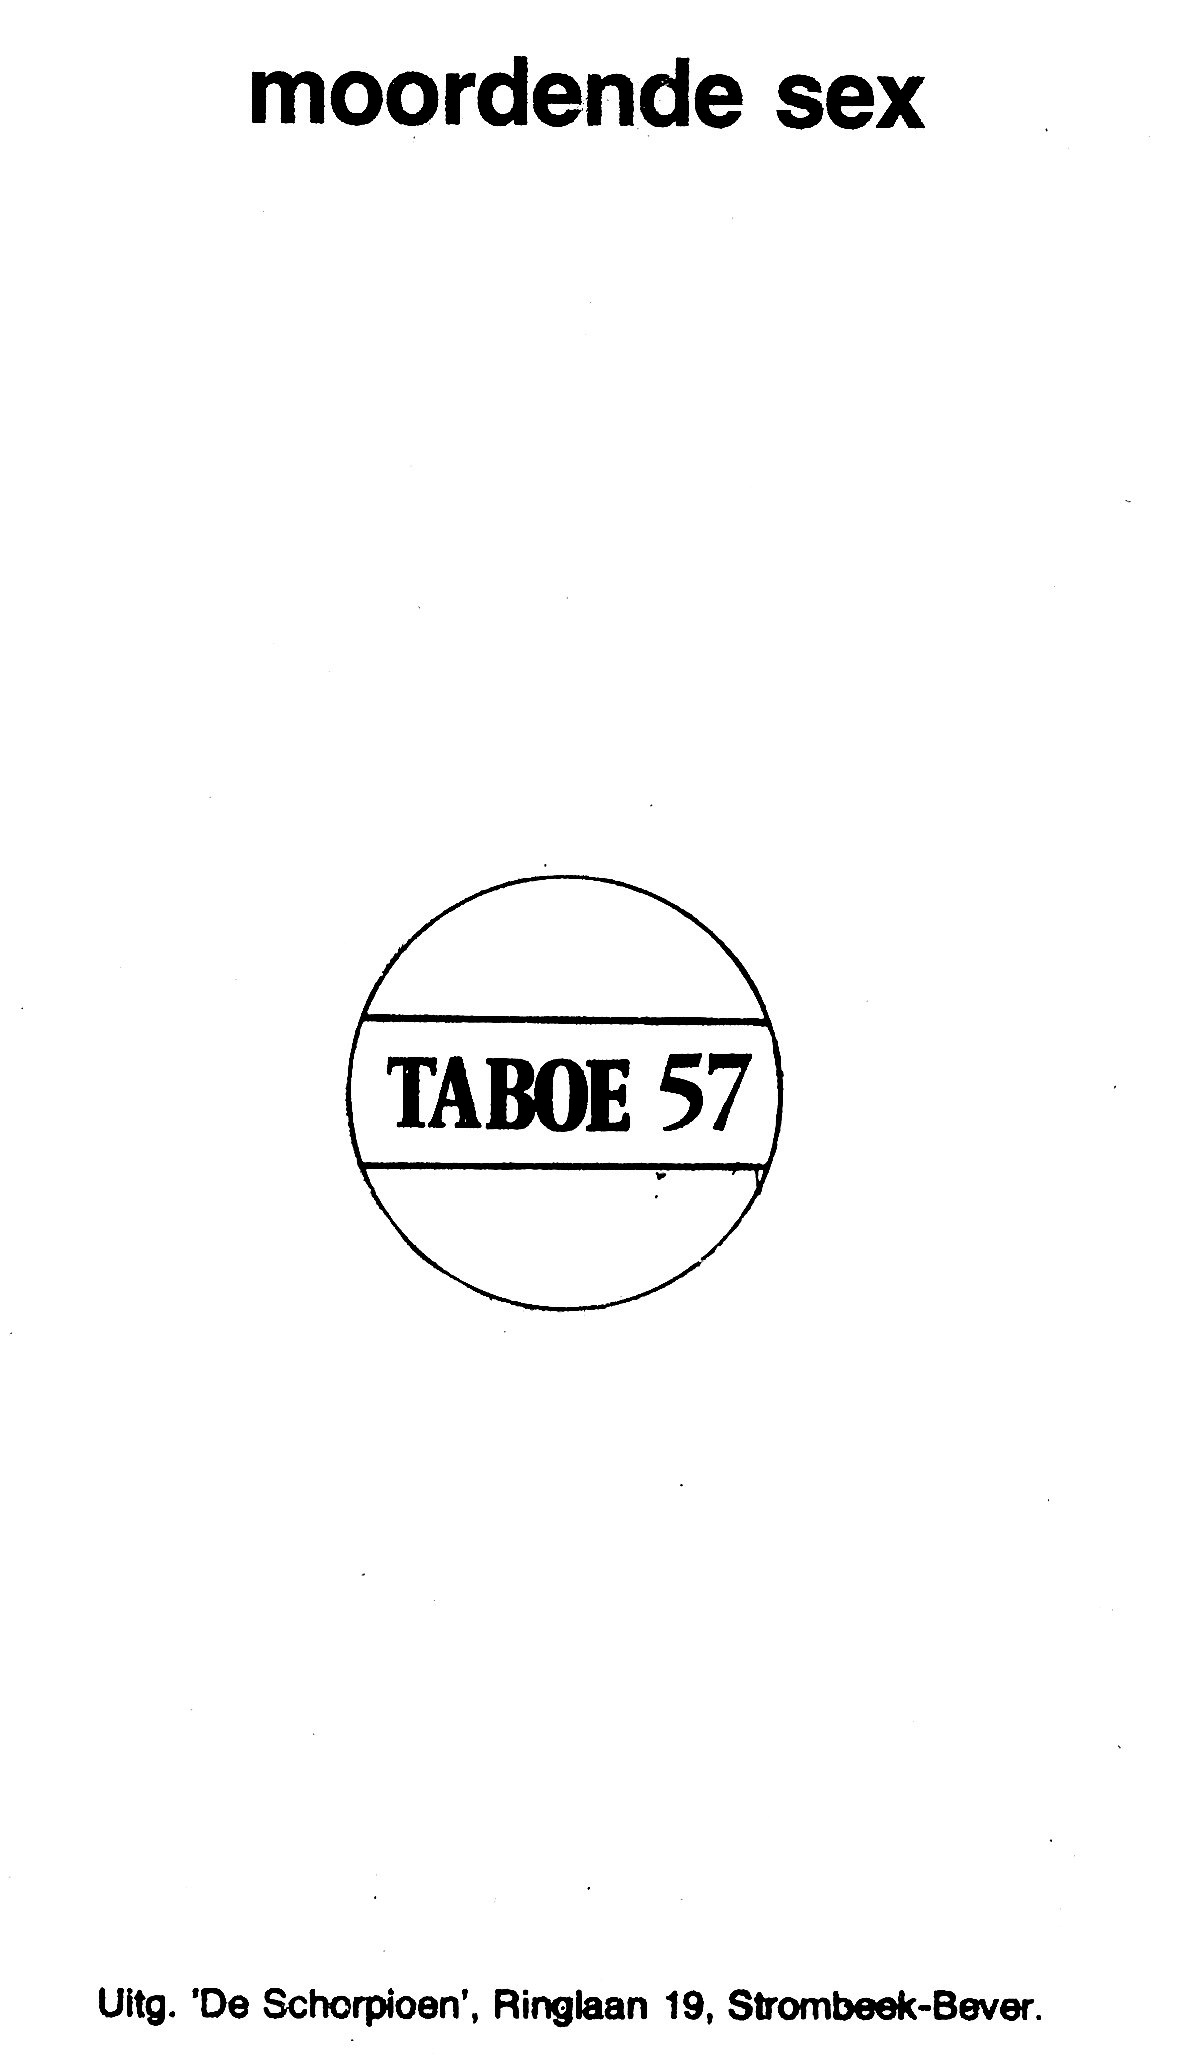 Taboe 57 - Moordende sex (Dutch) 1